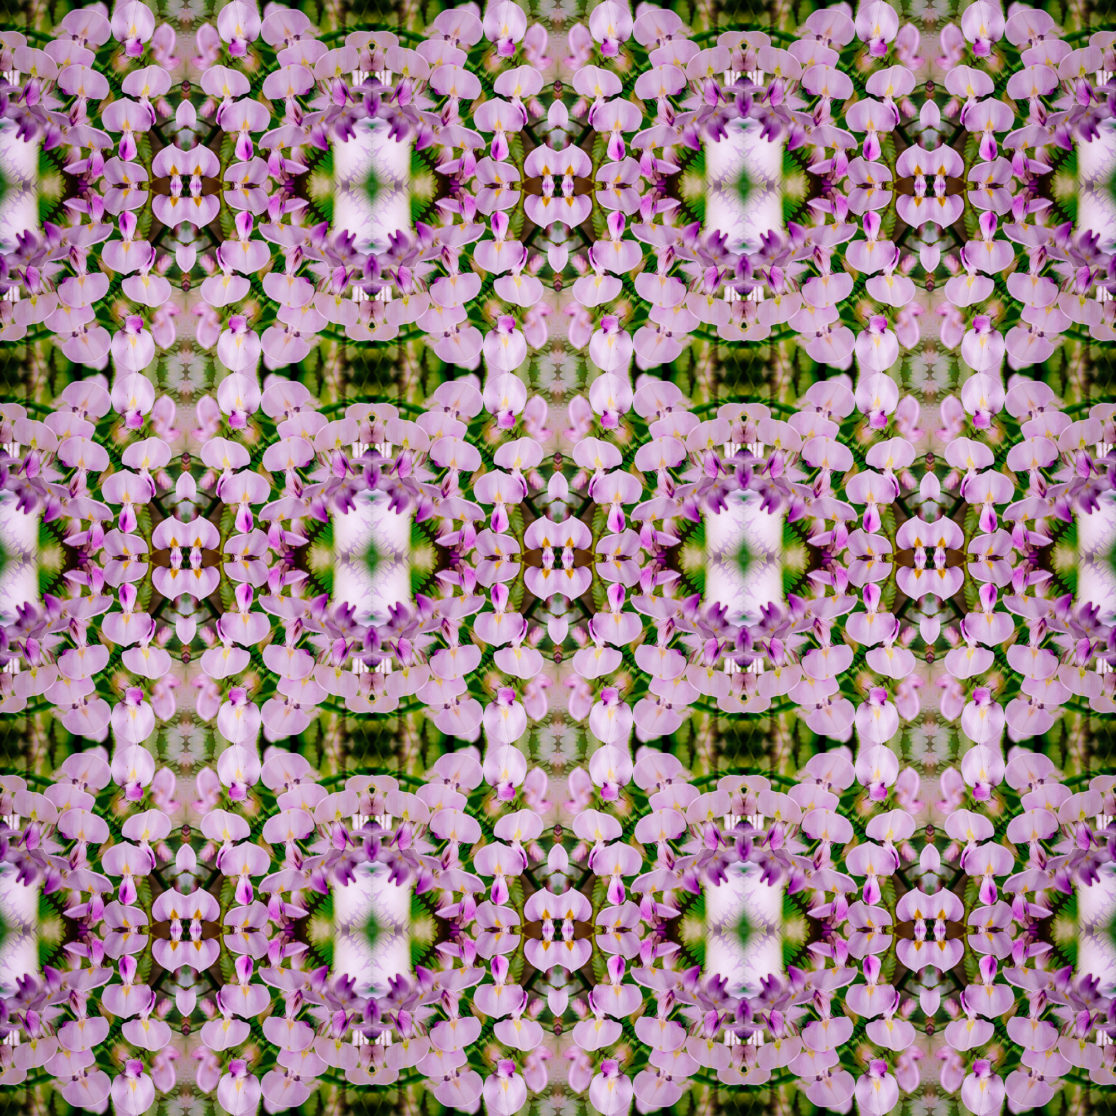 Matthias Maier | Geometrix | Small Blossoms – 04